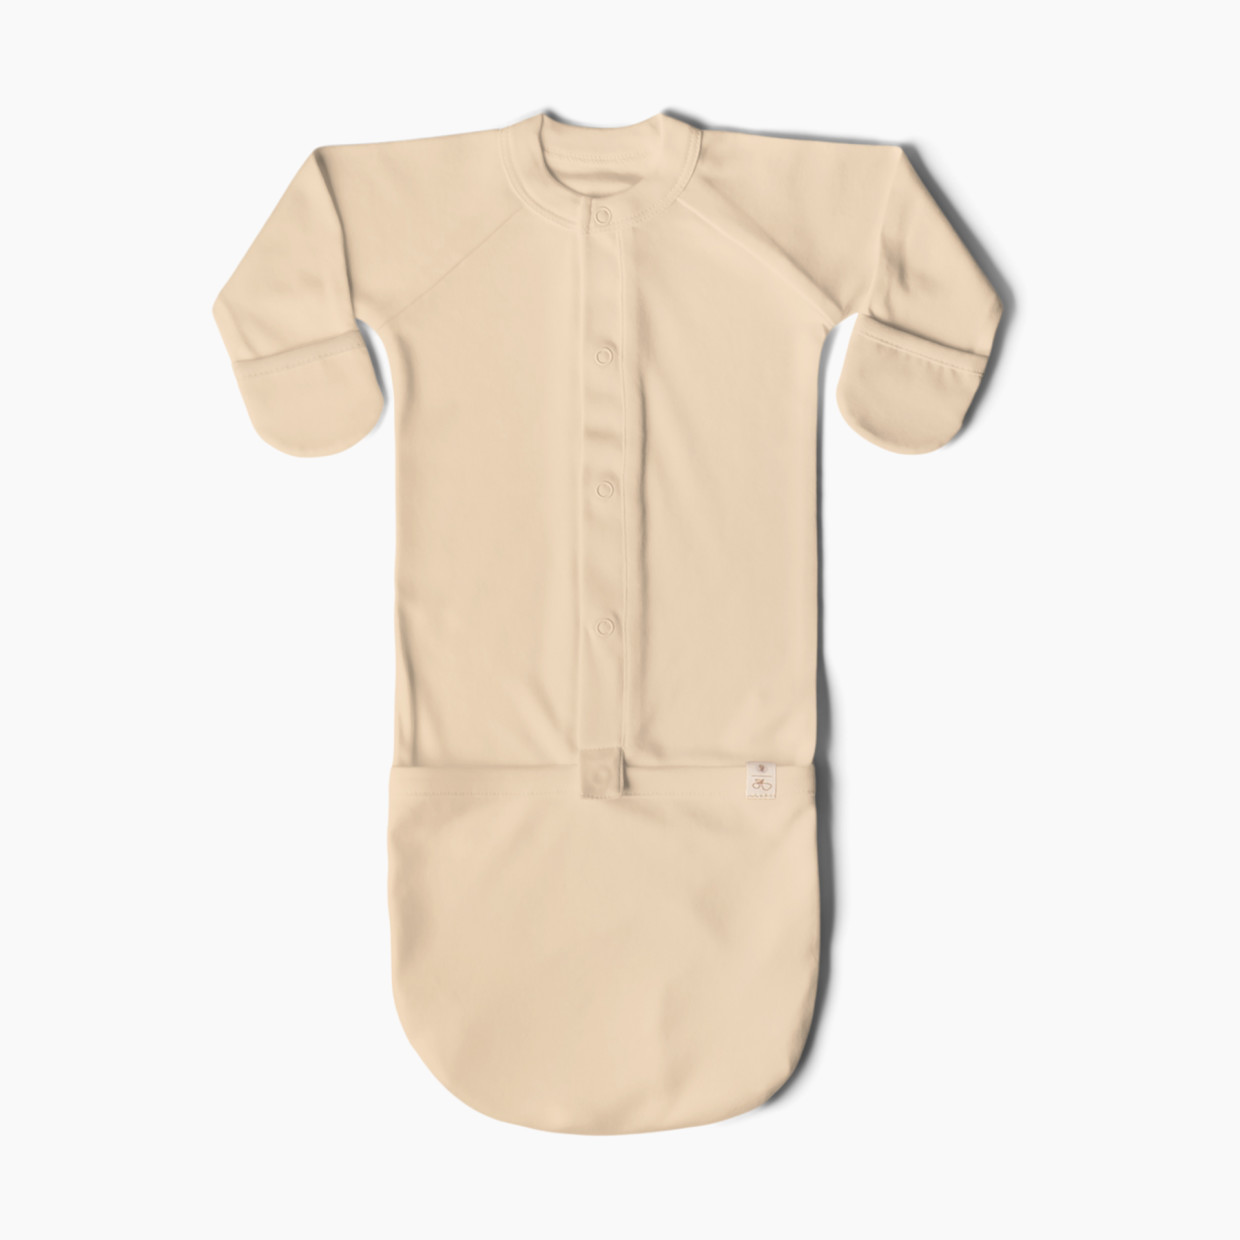 Goumi Kids 24hr Convertible Sleeper Baby Gown - Sand, 3-6 M.